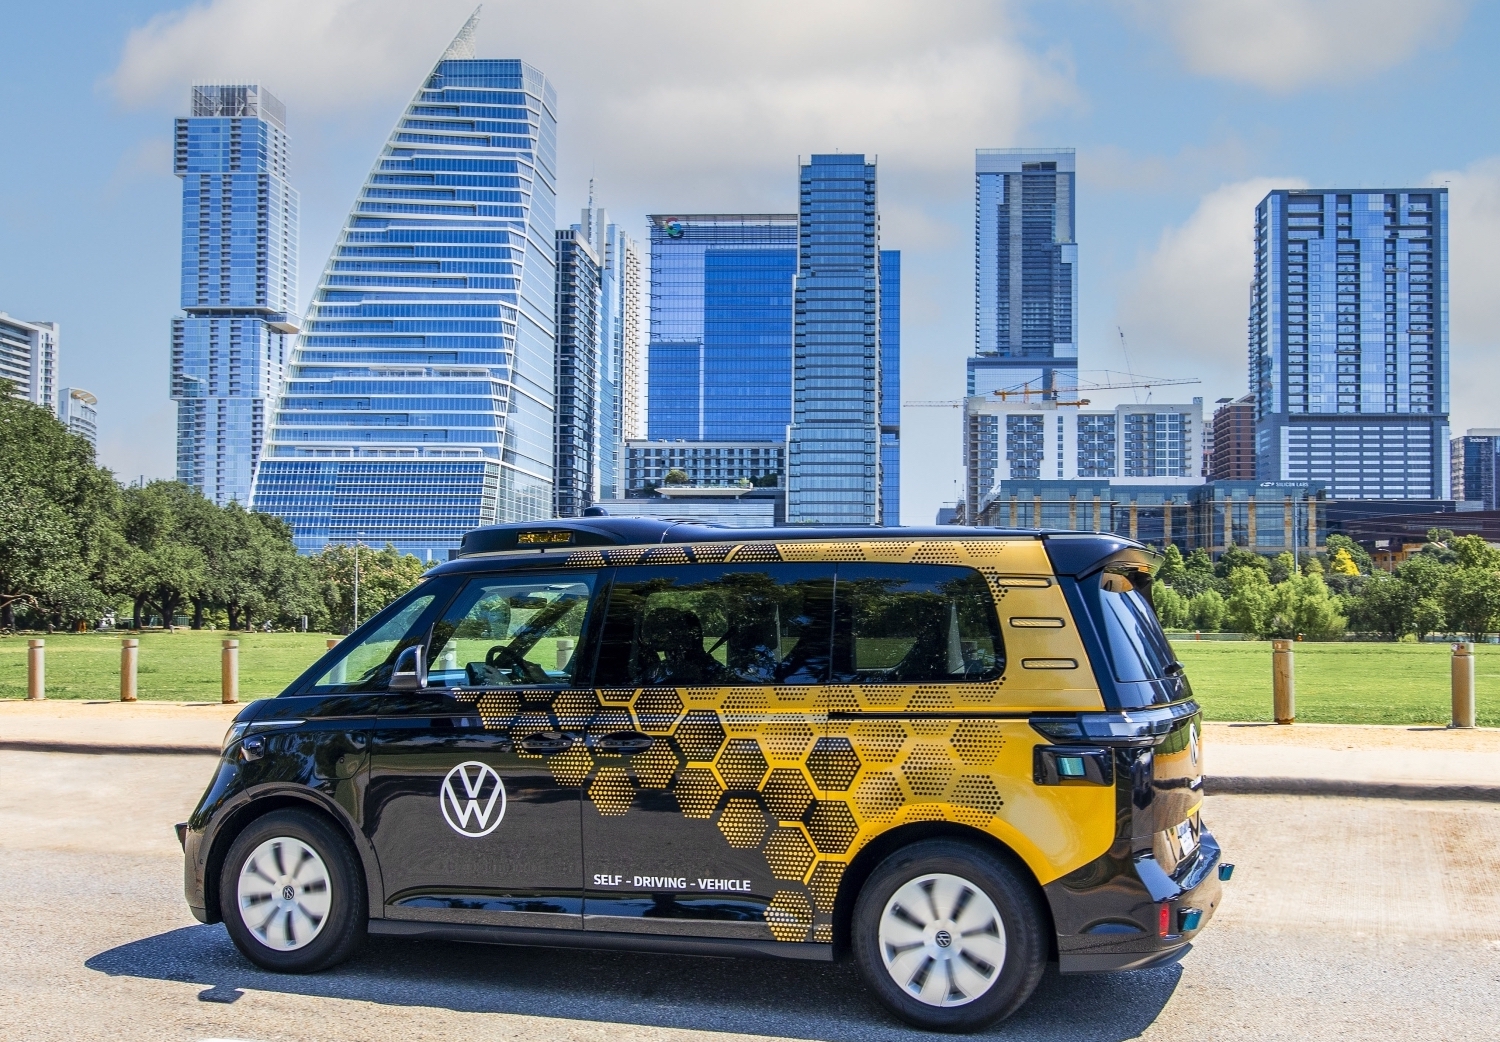 Volkswagen rolls out autonomous driving test program in Texas